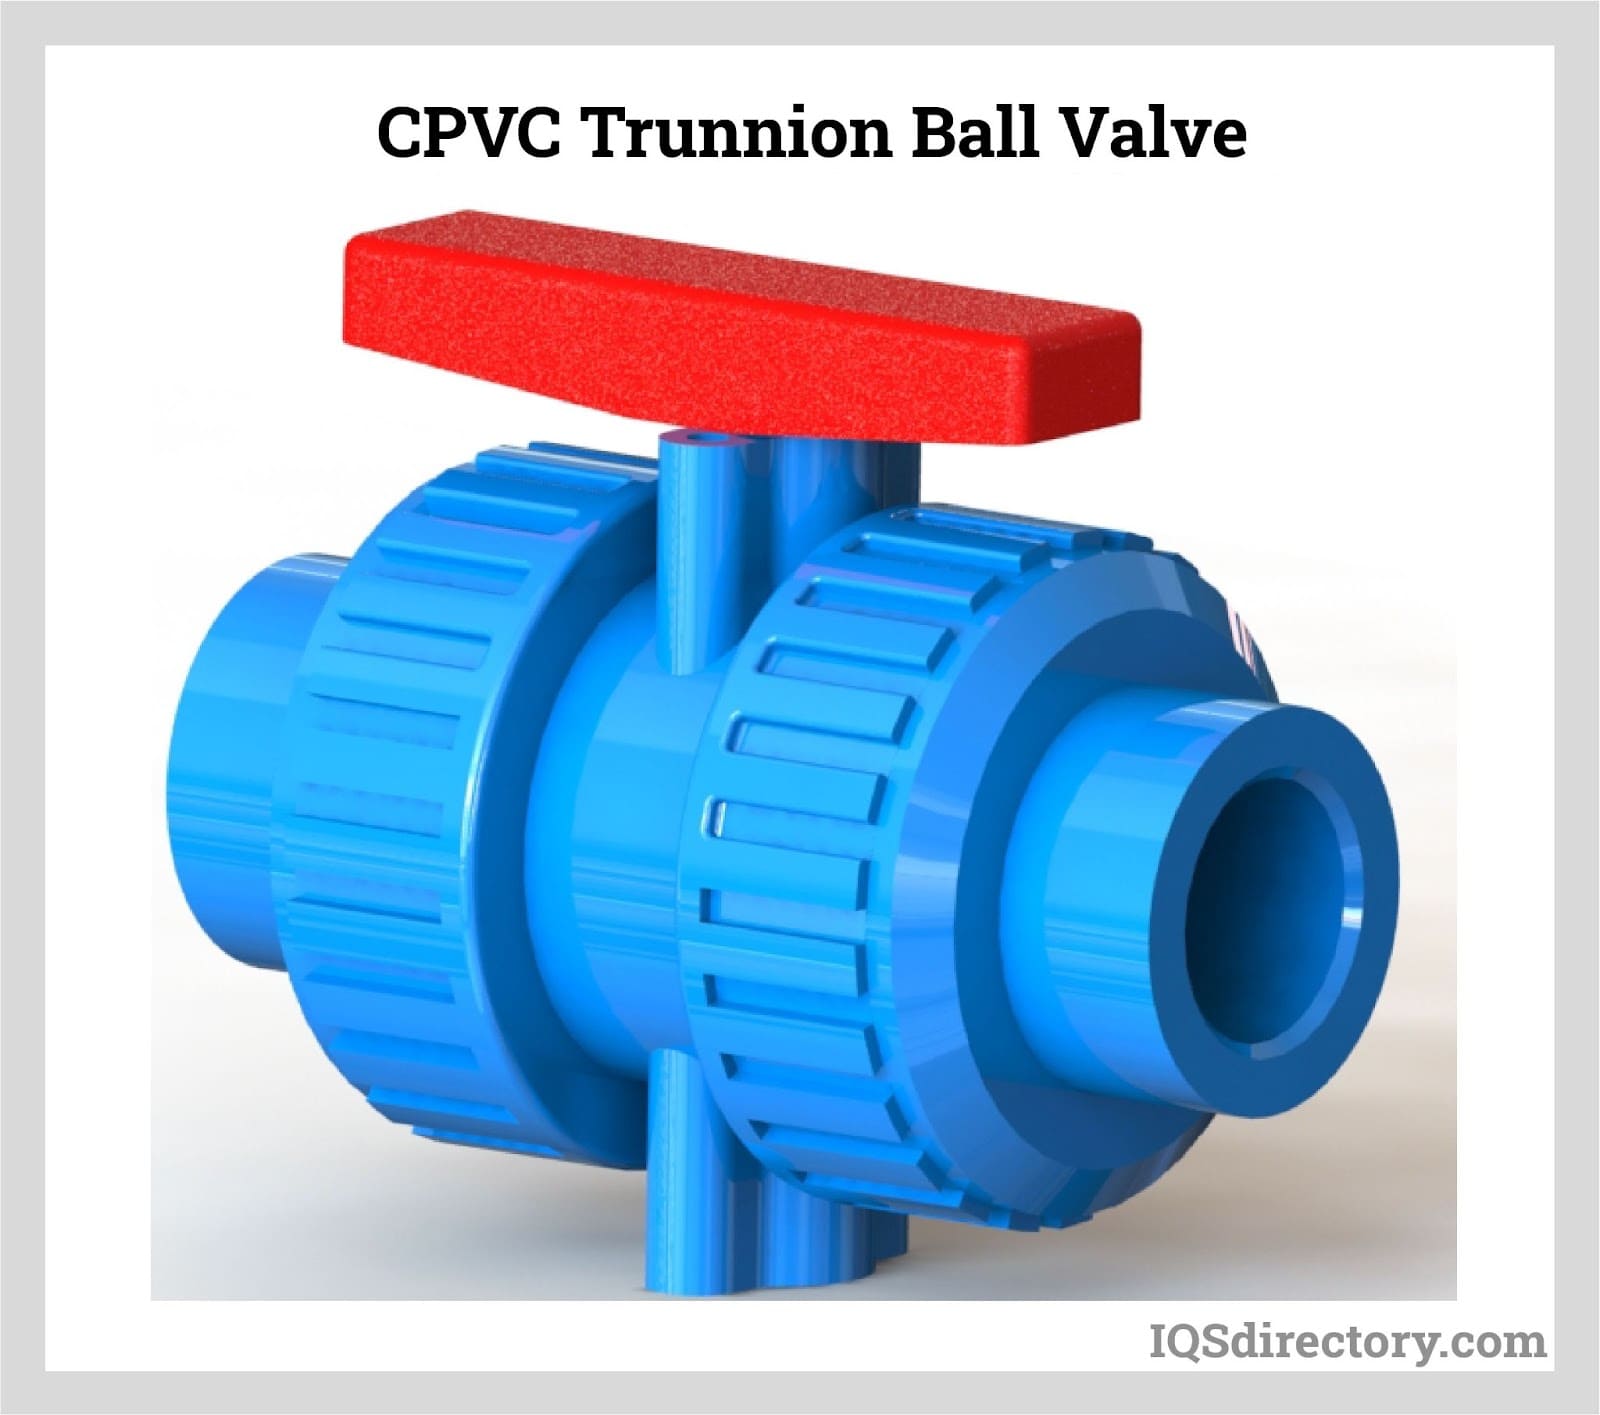 CPVC Trunnion Ball Valve